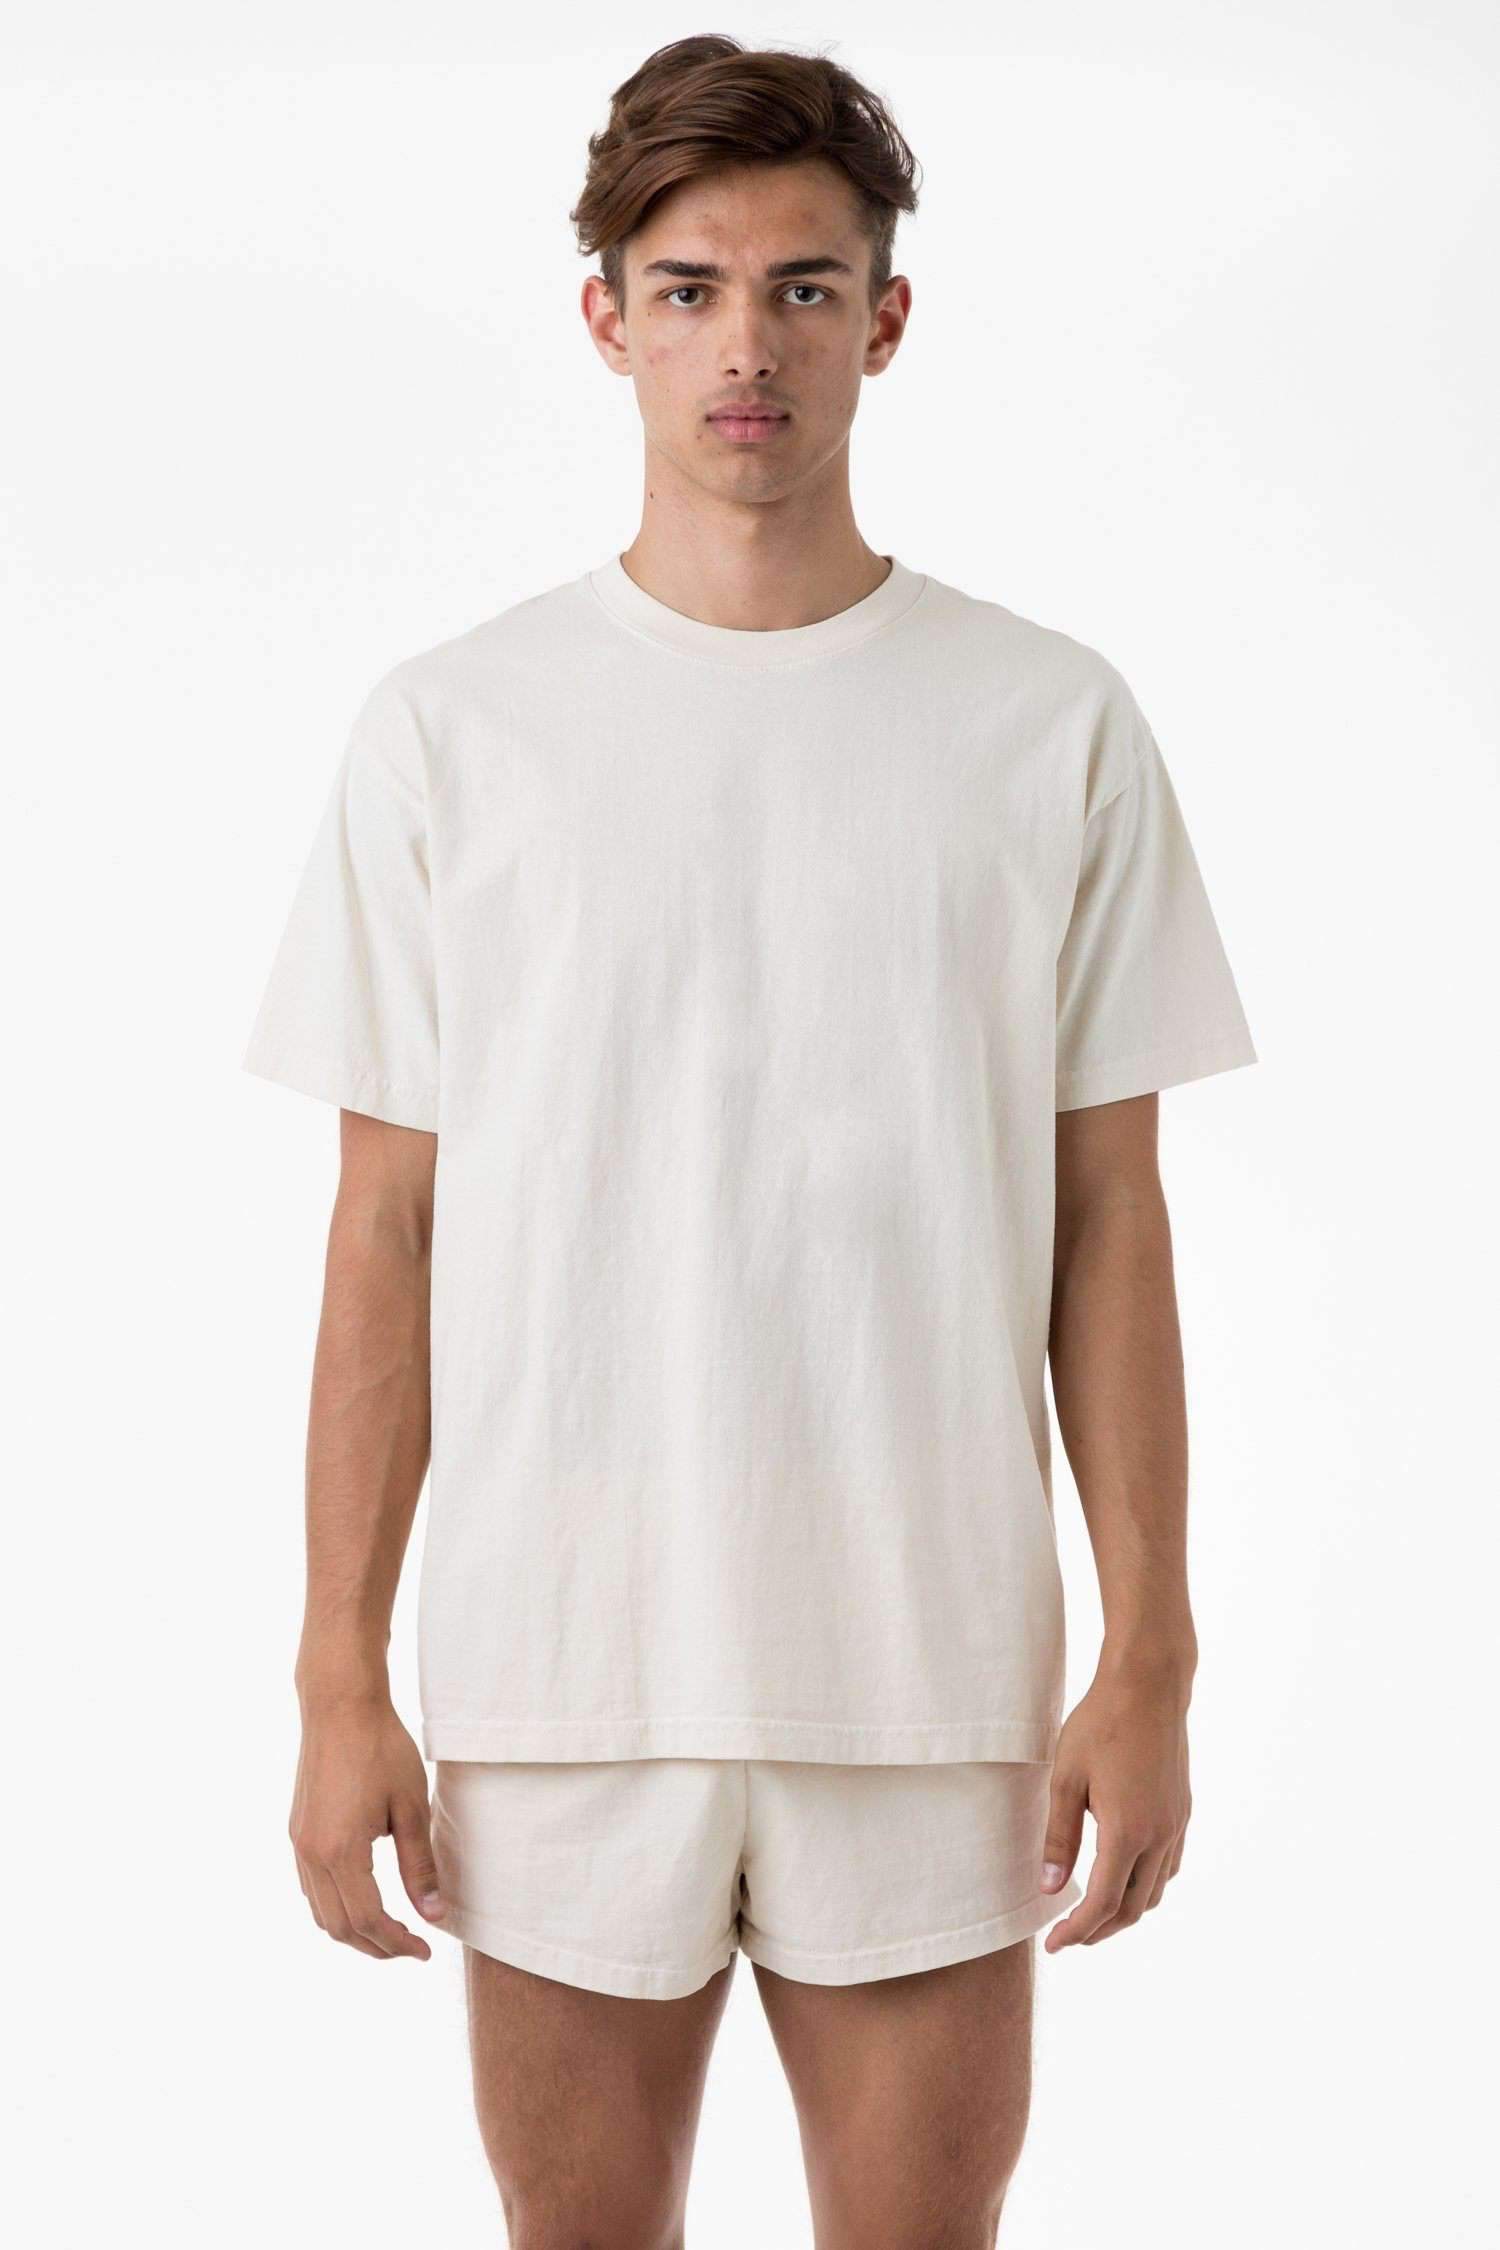 1801GD - 6.5oz Garment Dye Pastel Crew Neck T-Shirt T-Shirt Los Angeles Apparel Creme S 